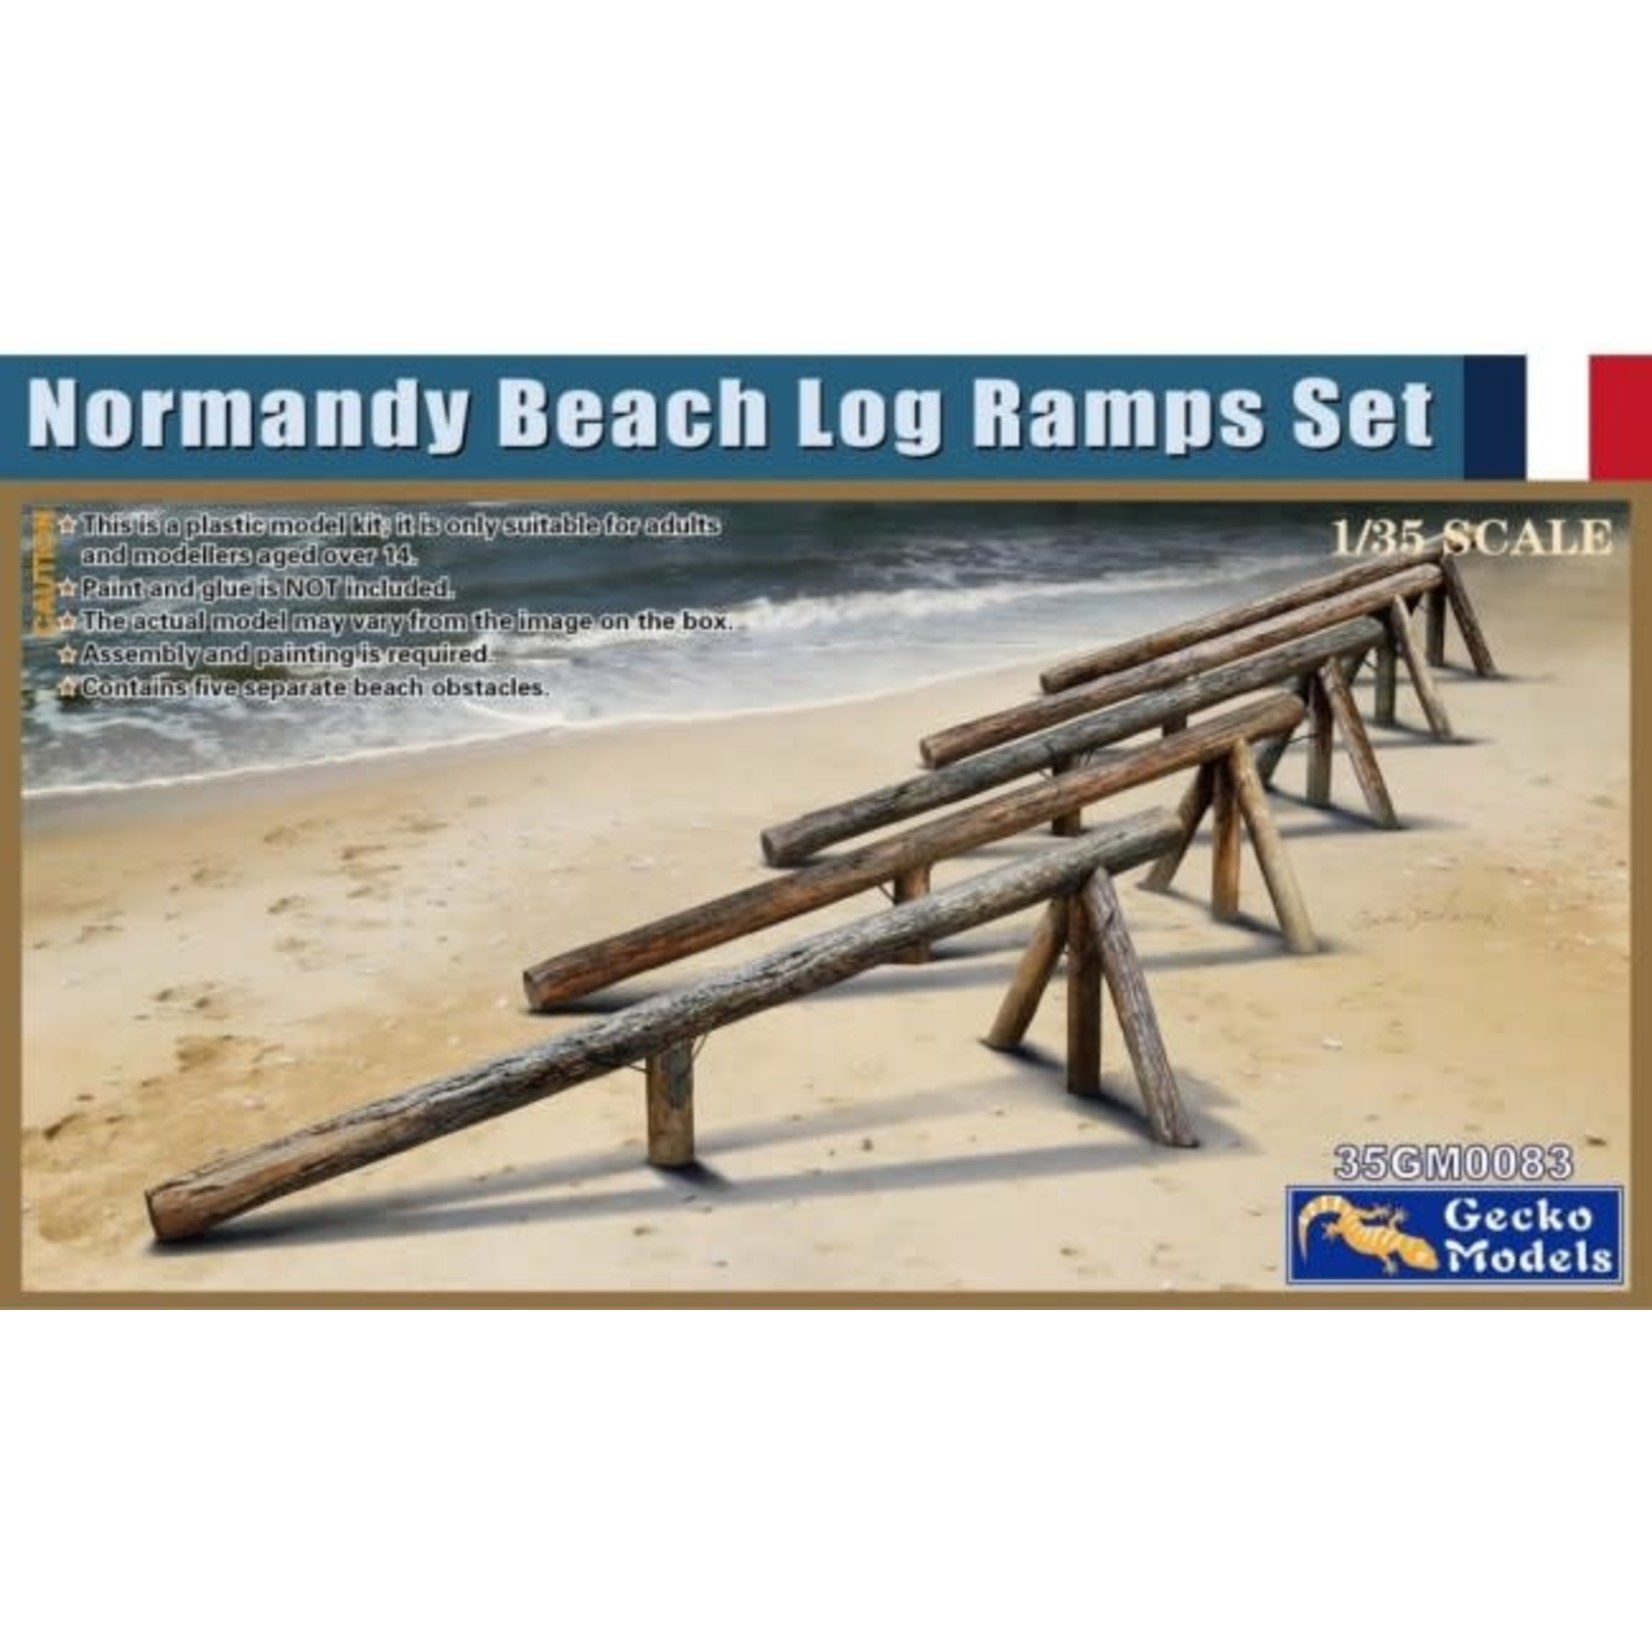 Gecko Models 1/35 Normandy Beach Log Ramps Set (5